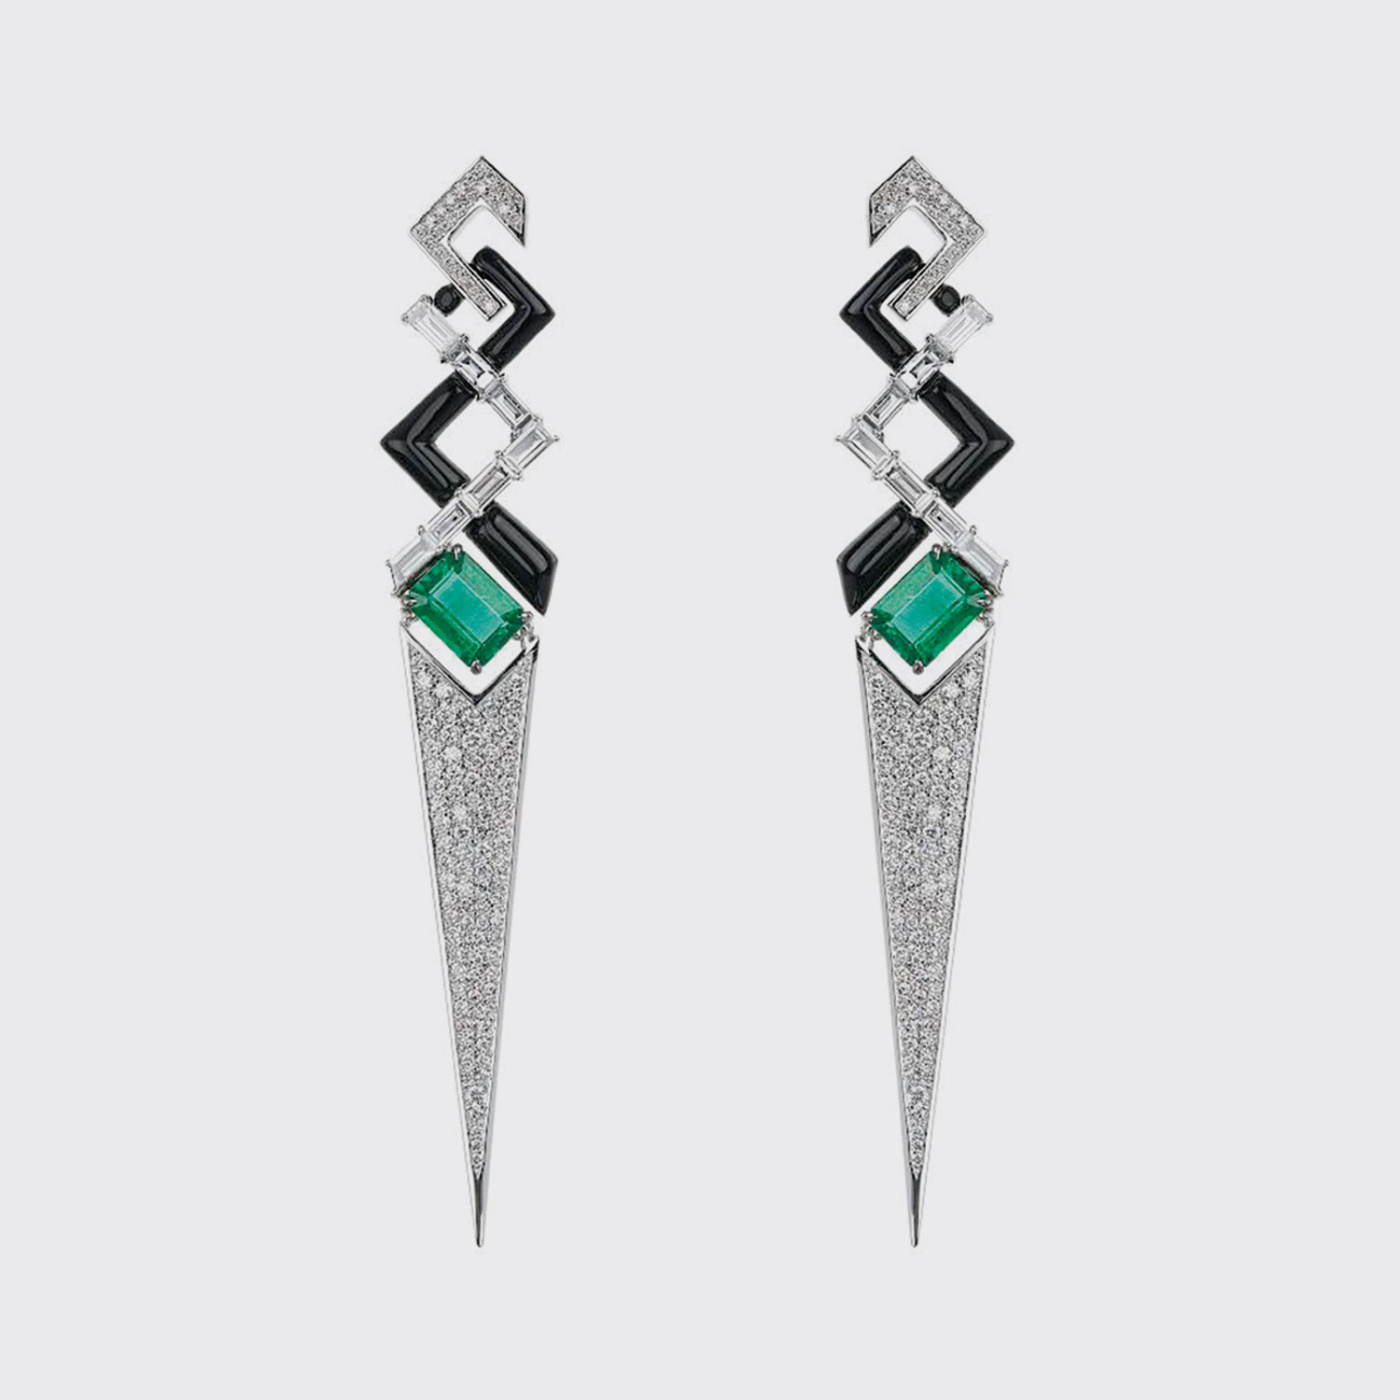 White gold long earrings with white diamonds, emeralds and black enamel